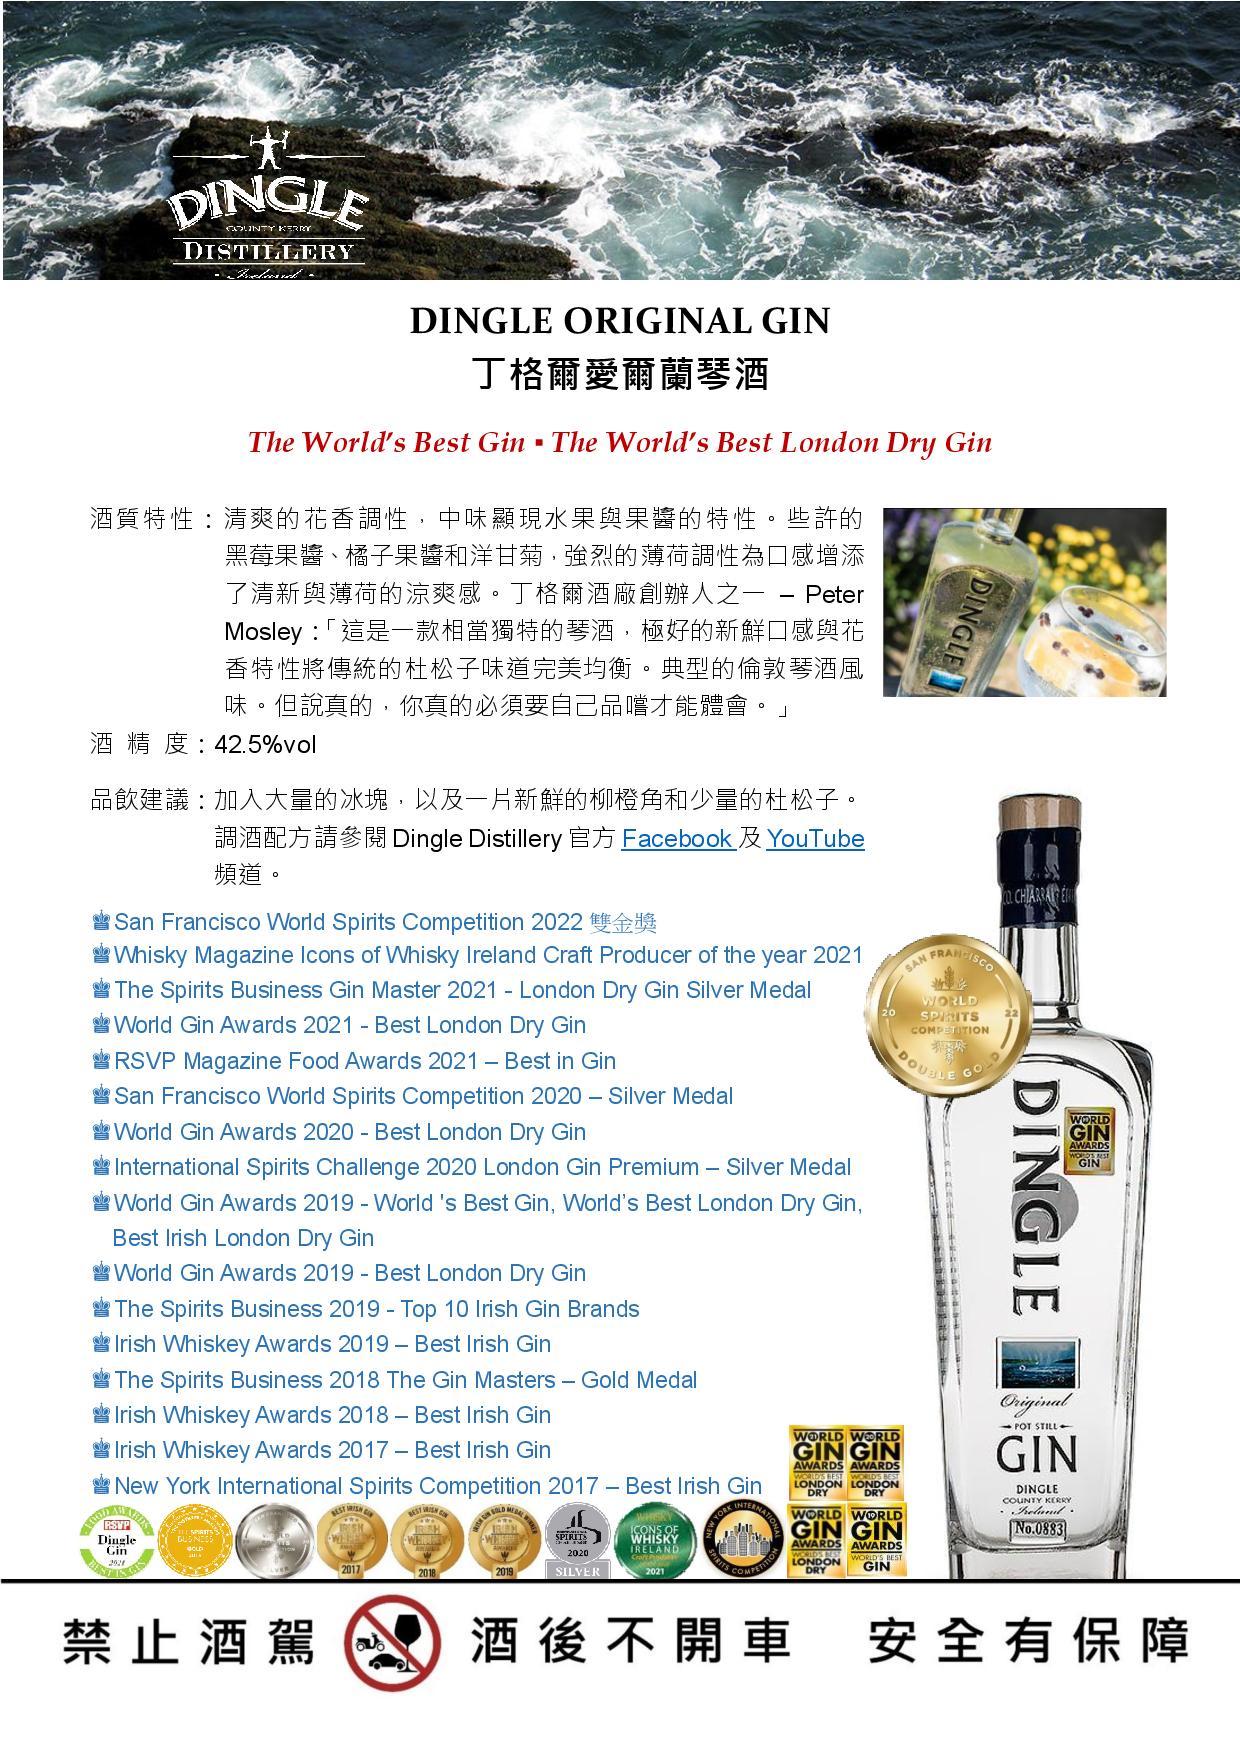 DD301 DINGLE ORIGINAL GIN 丁格爾愛爾蘭琴酒